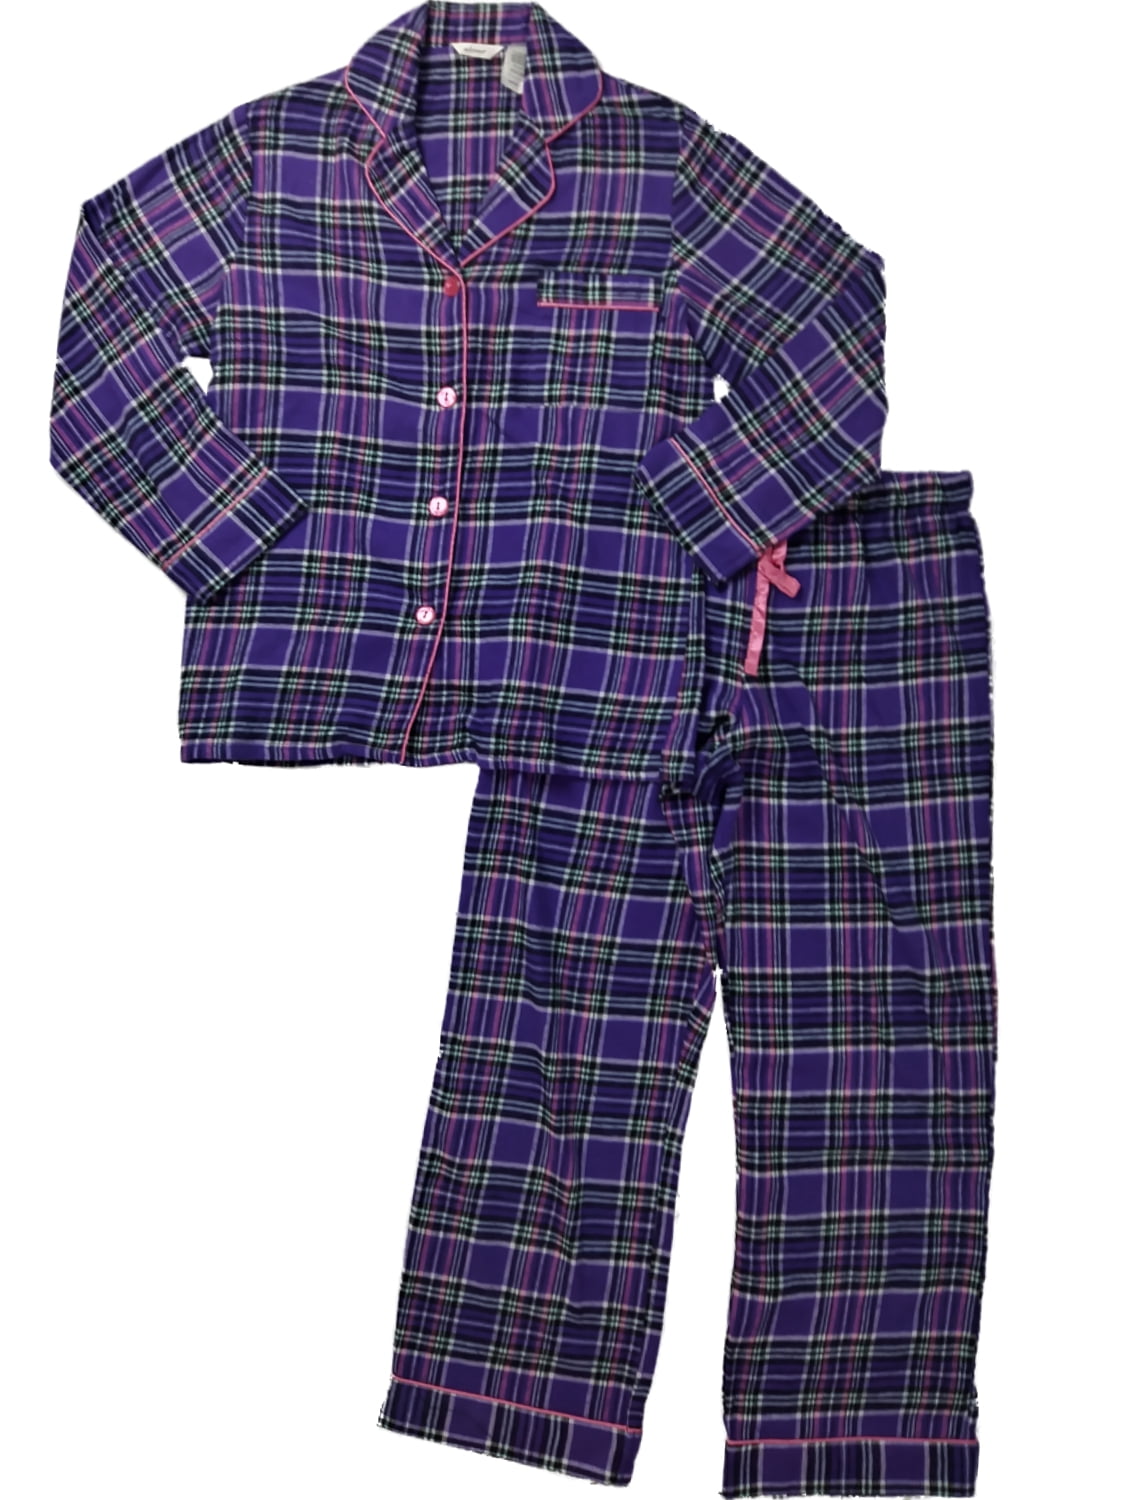 JOE BOXER Women's Pajama Set Plaid Flannel Pink Black Notch Collar Design NEW